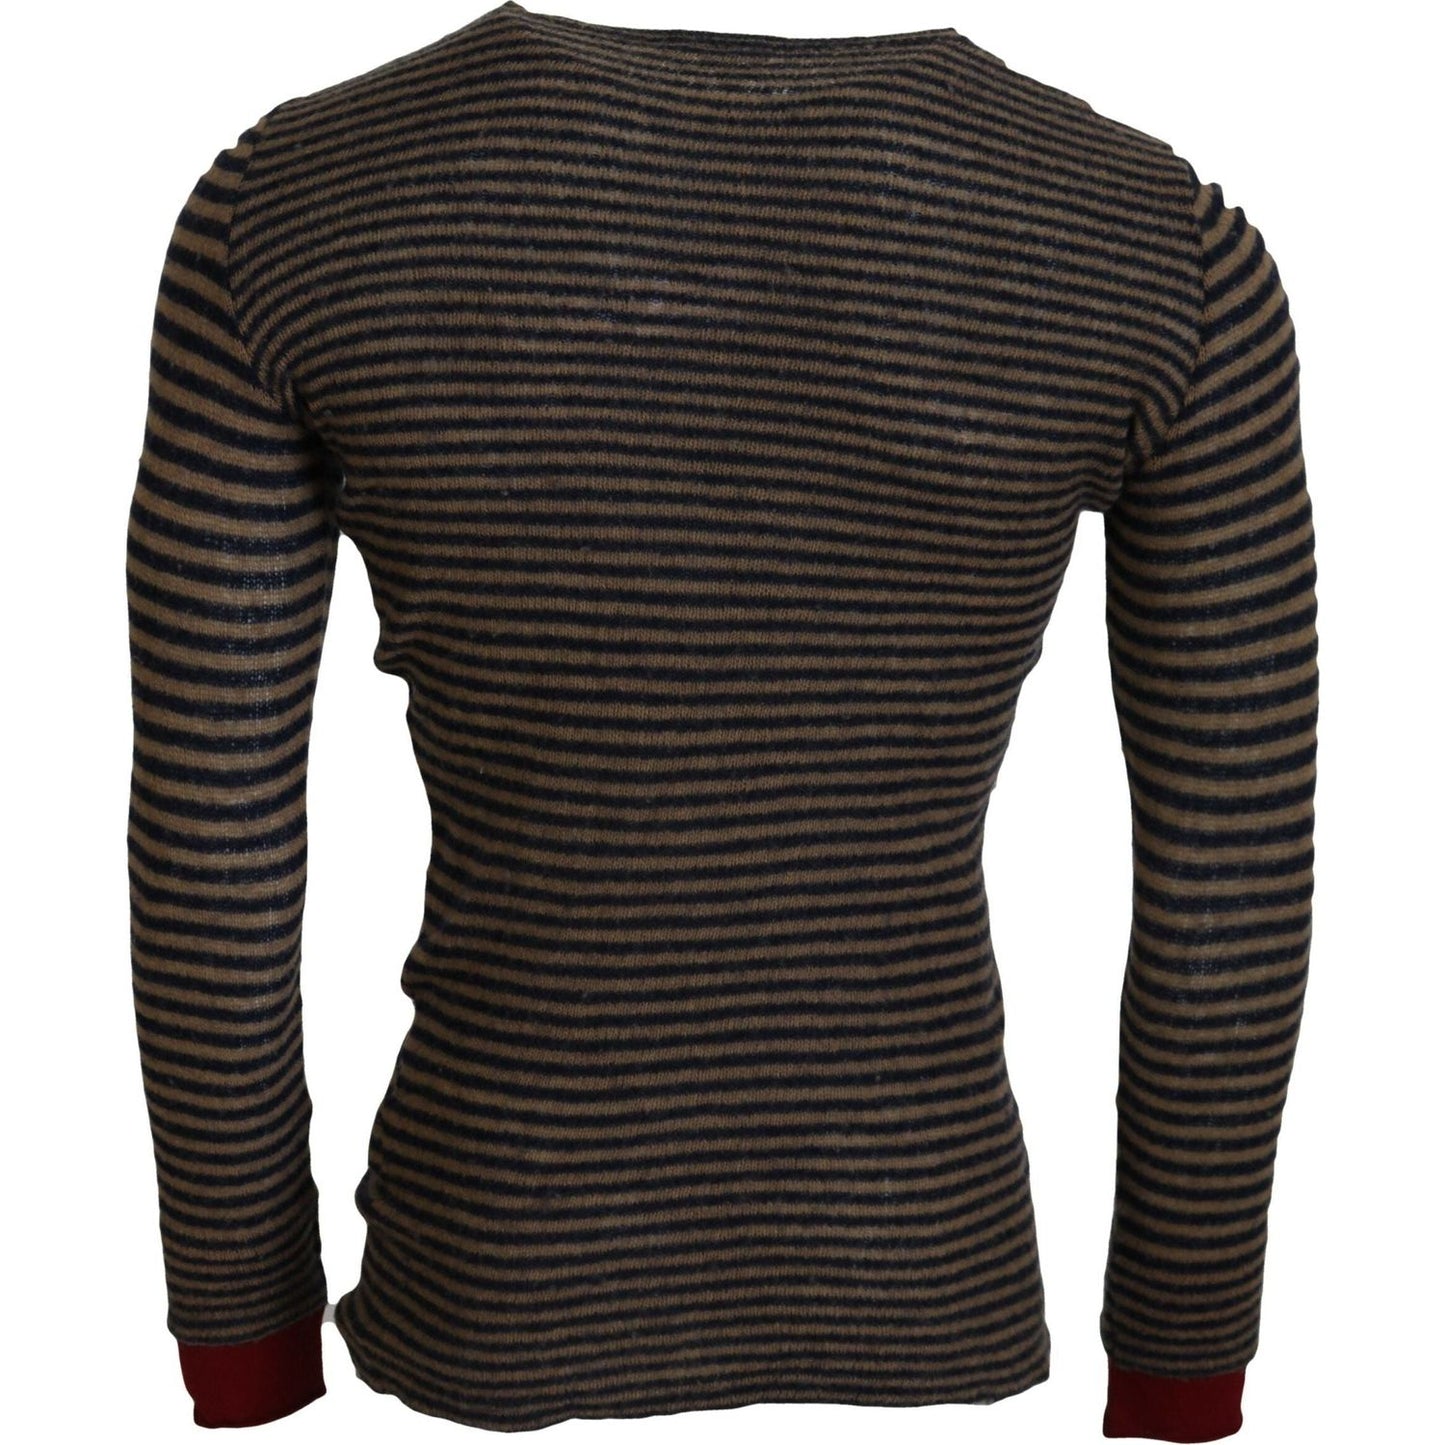 Daniele Alessandrini Chic Black and Brown Crewneck Pullover Sweater multicolor-stripes-wool-crewneck-pullover-sweater IMG_0681-scaled-437f25d1-5c4.jpg